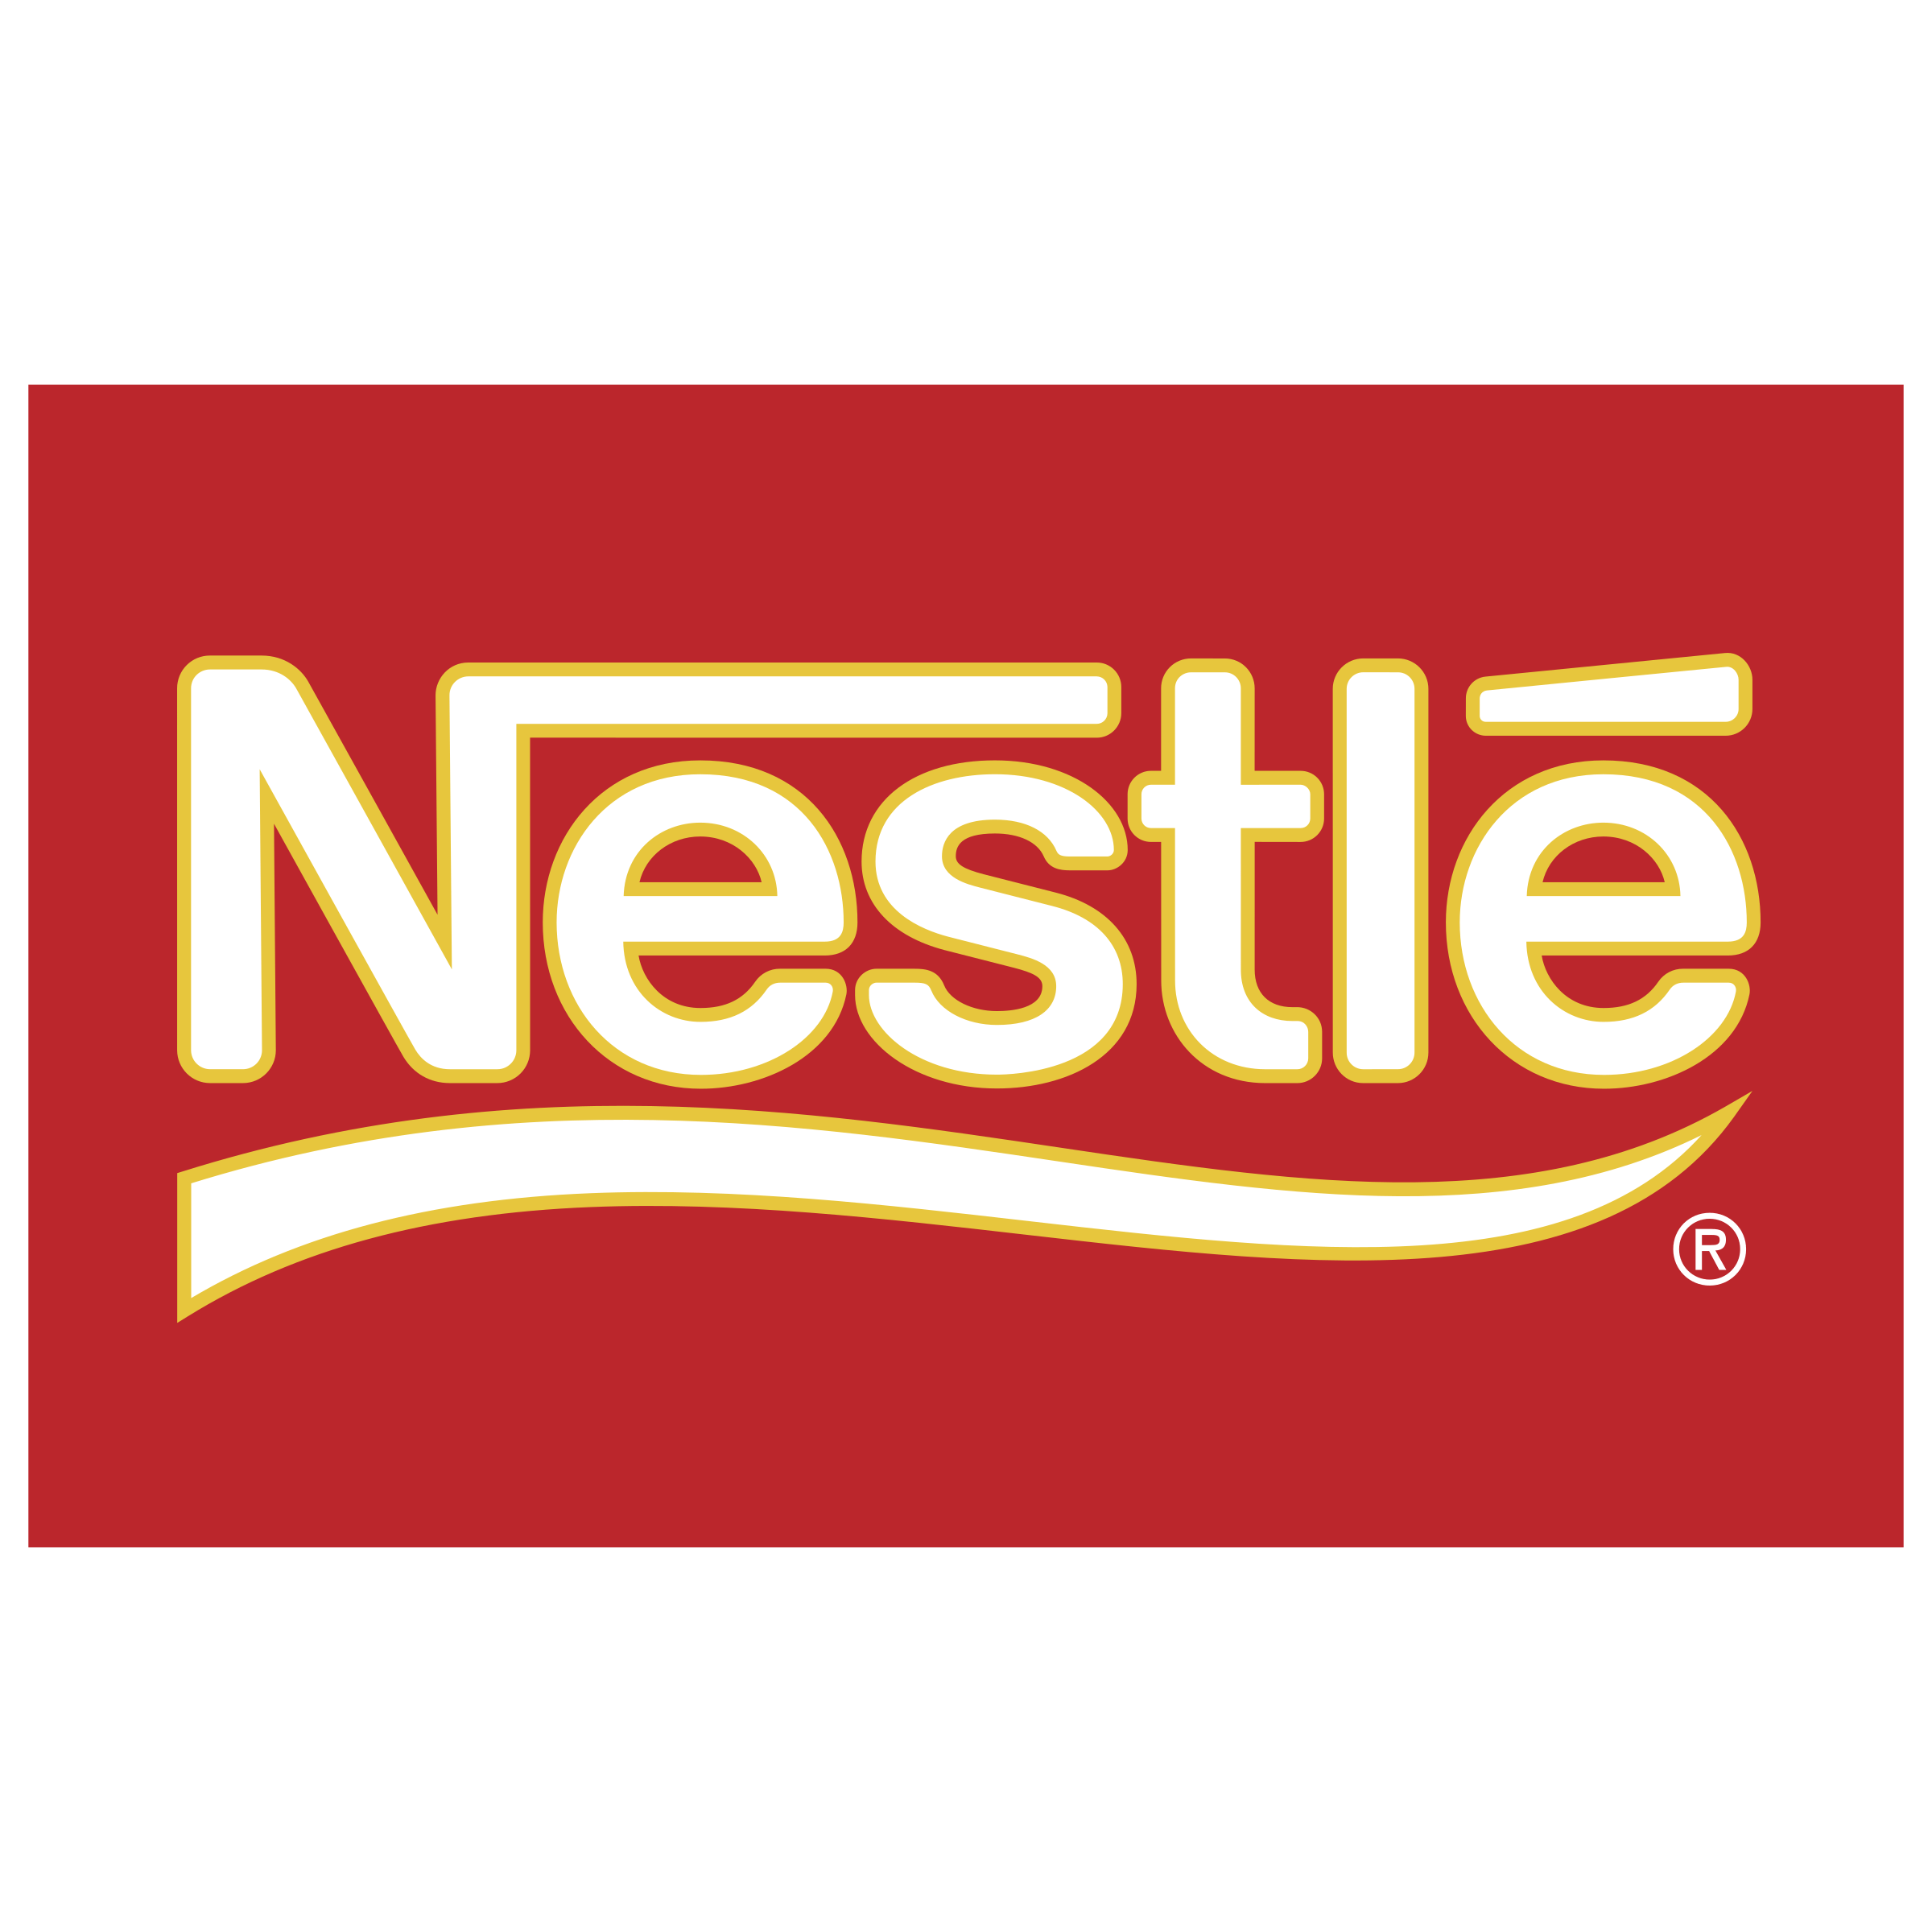 Nestle Chocolate Logo - Nestle Chocolate Logo PNG Transparent & SVG Vector - Freebie Supply